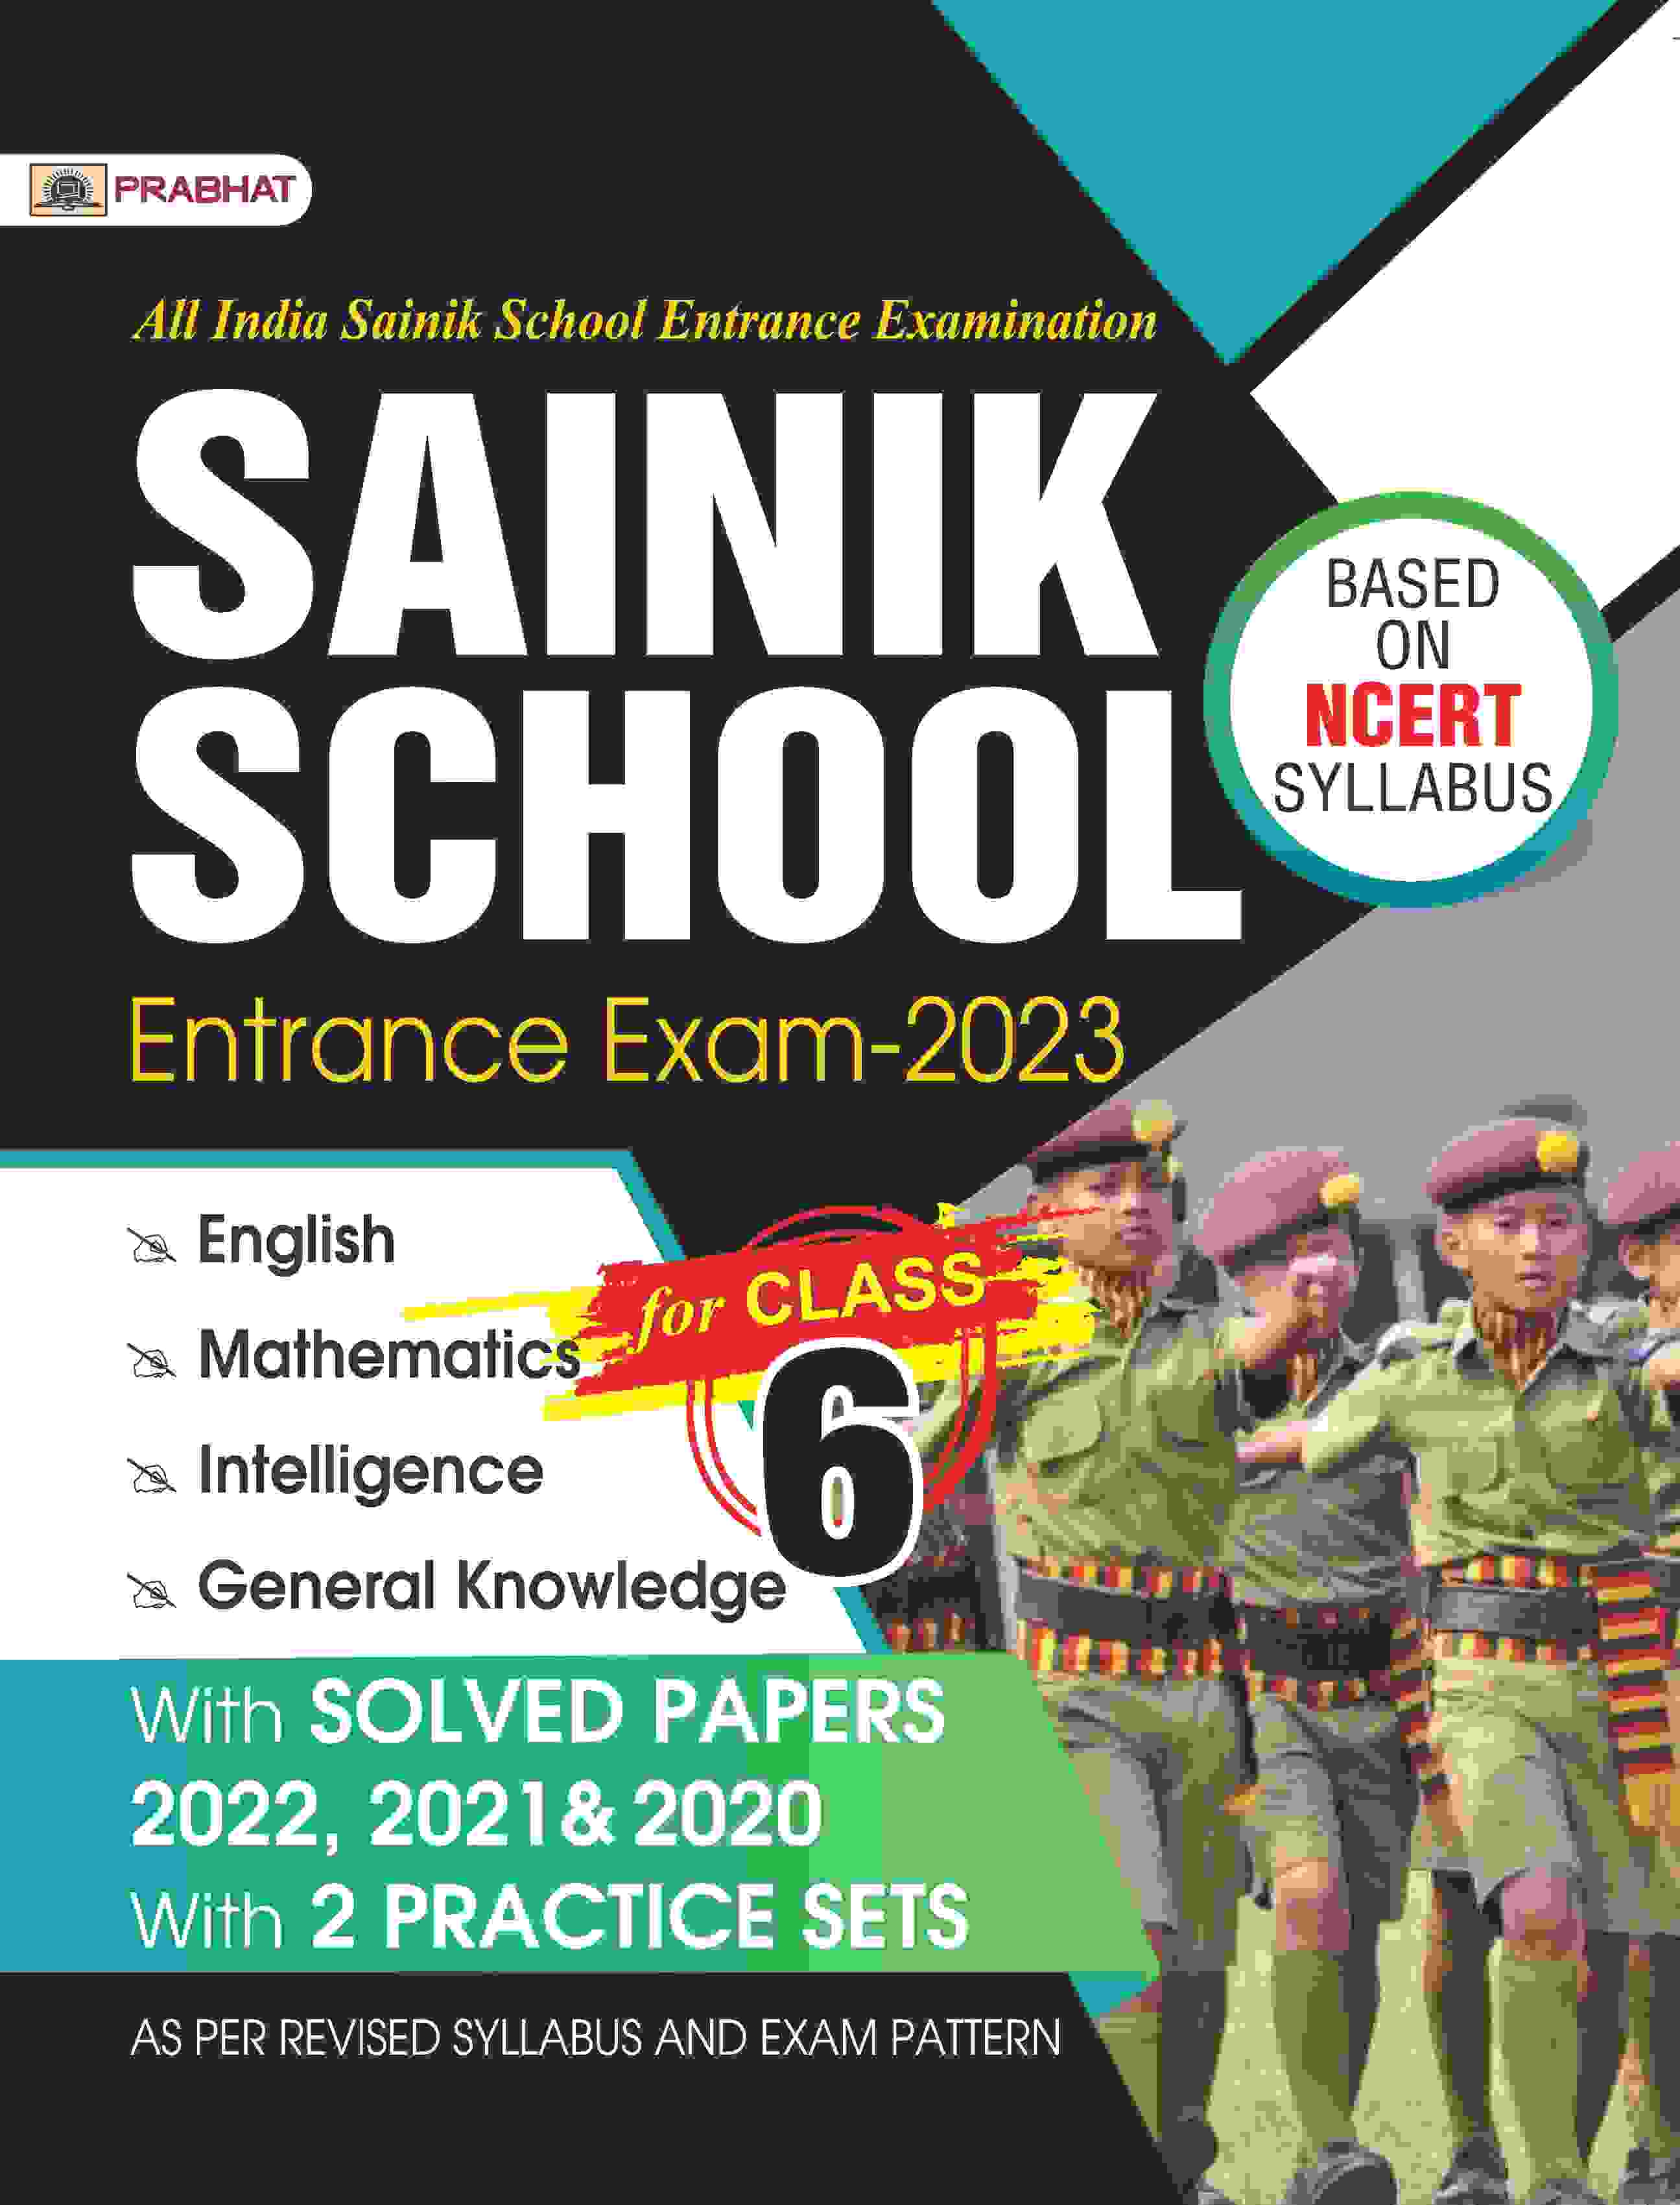 AISSEE: All India Sainik School Entrance Examination Sainik School Entrance Exam-2023 for Class 6 